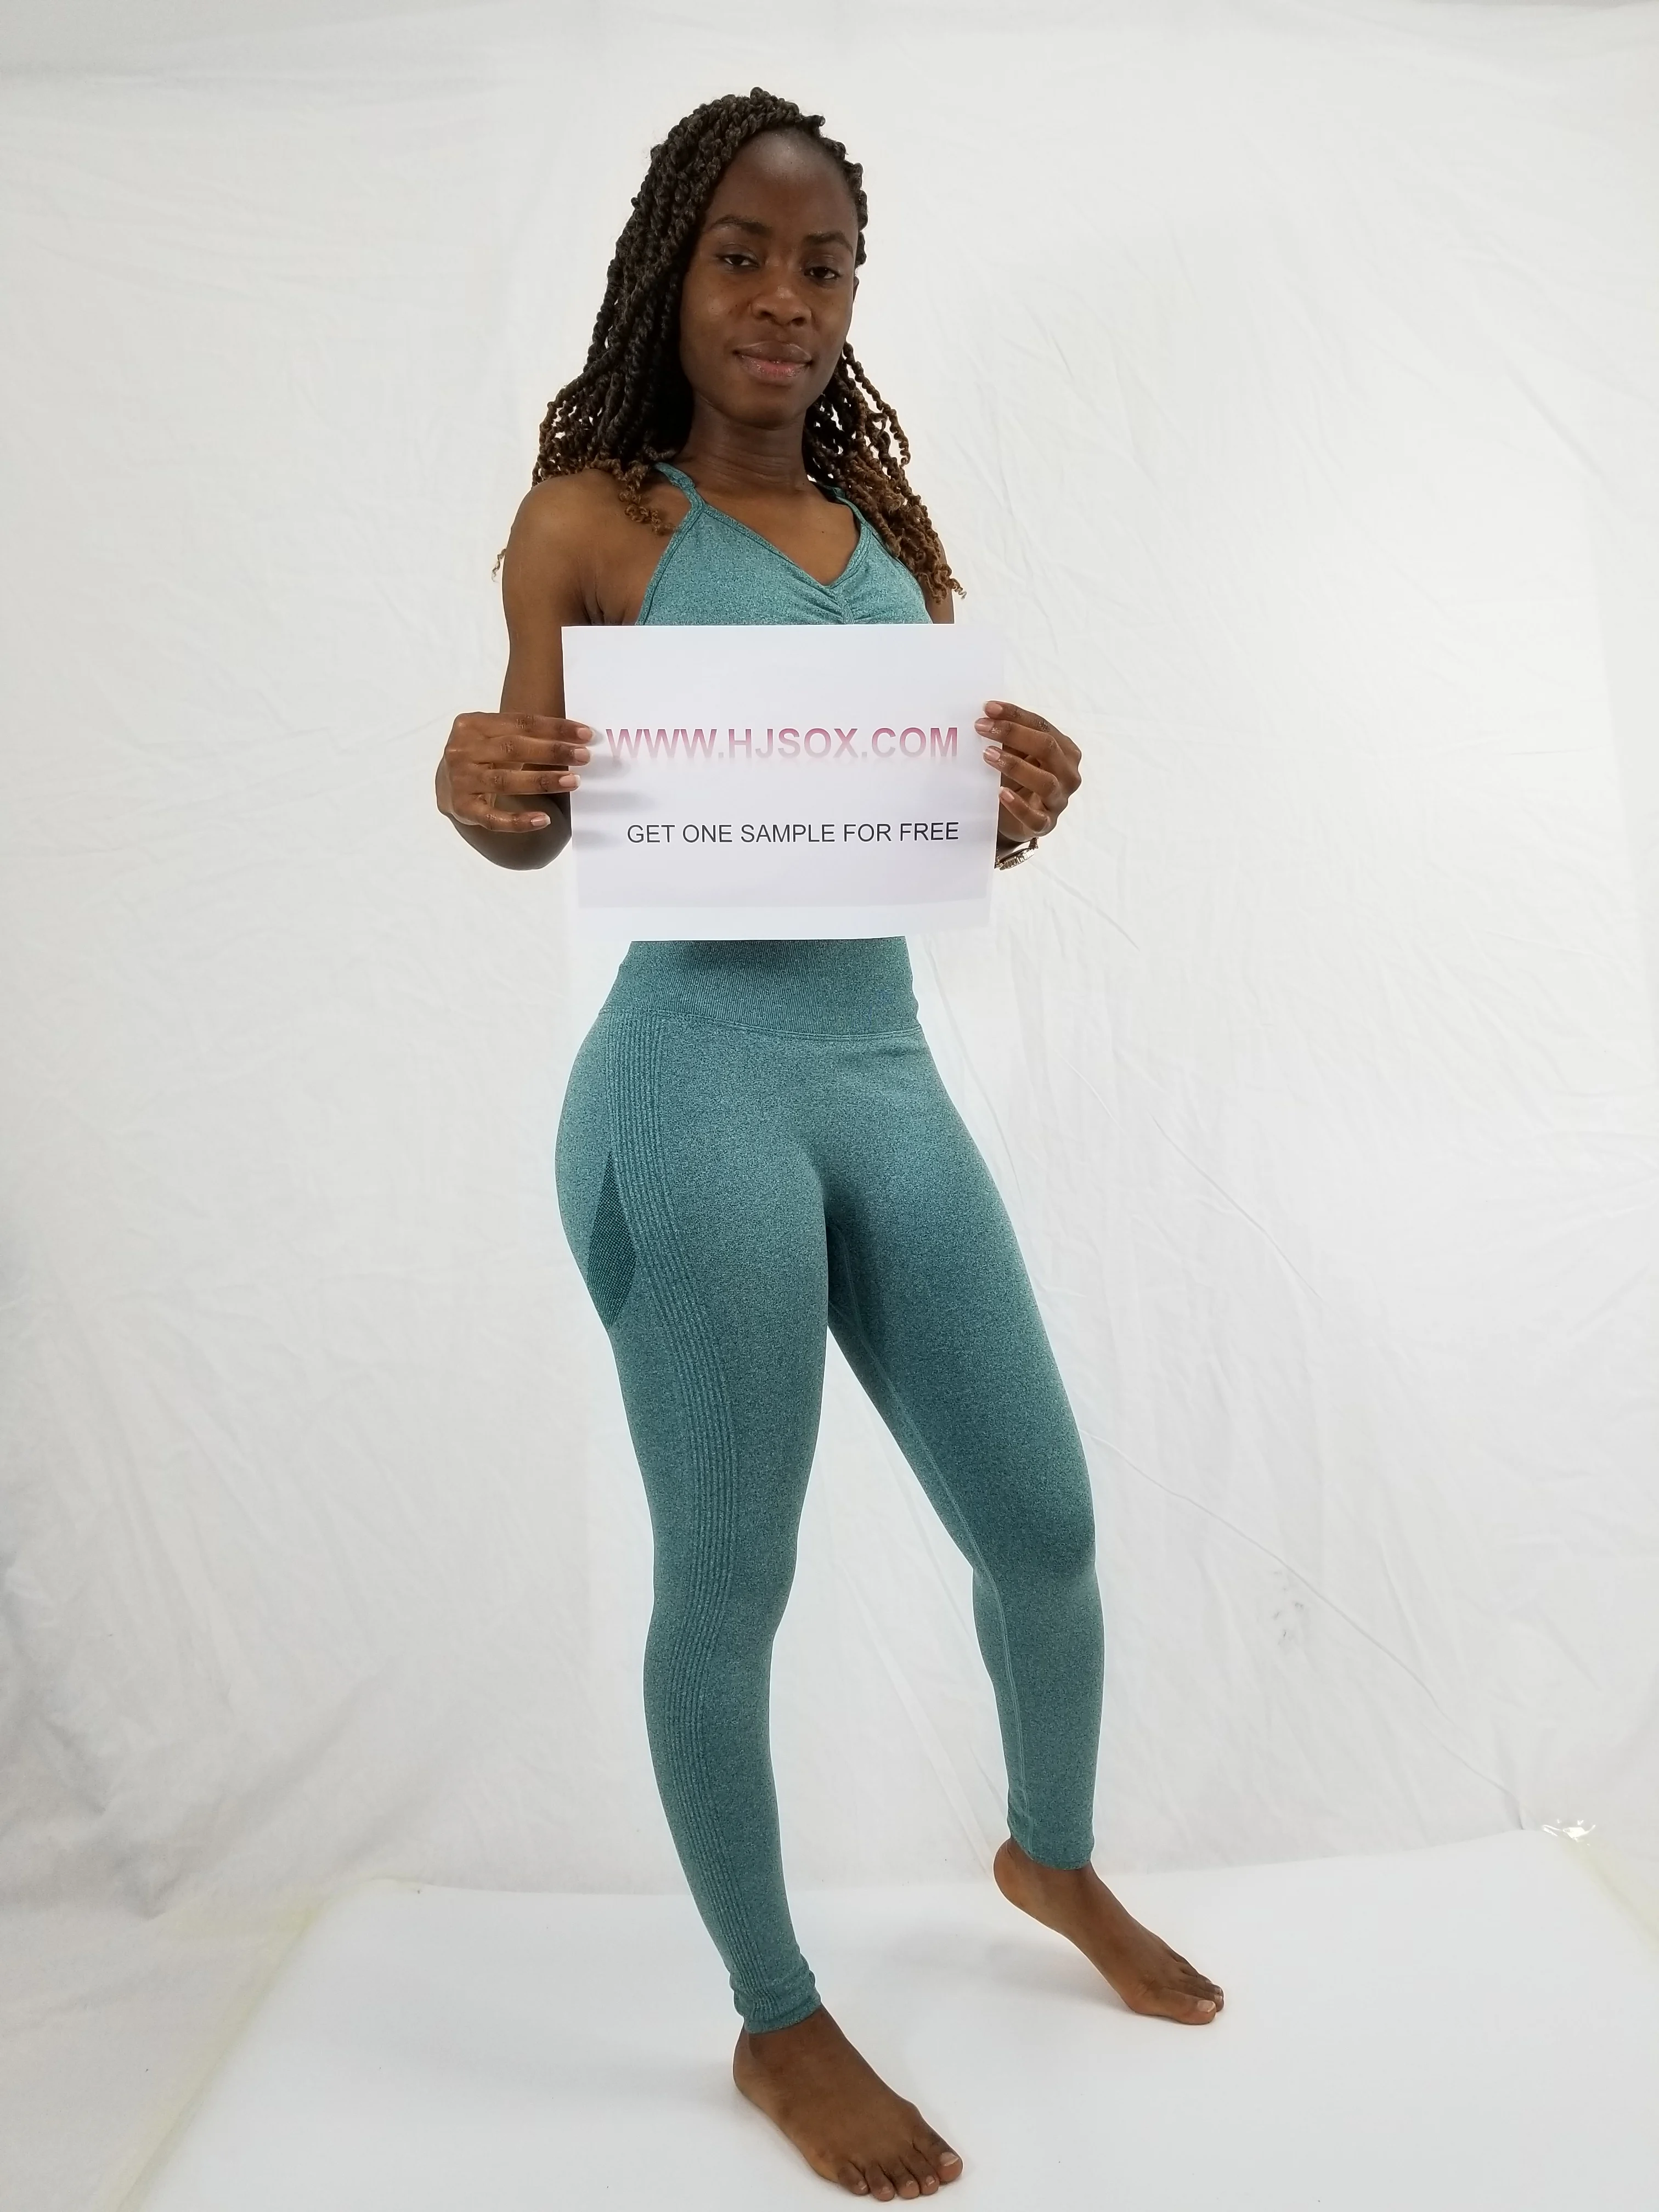 
High Waist Sport Leggings Fitness Women Yoga Pants Elastic Seamless Push Up Tights Gym Workout Squat Proof Running Sportswear 